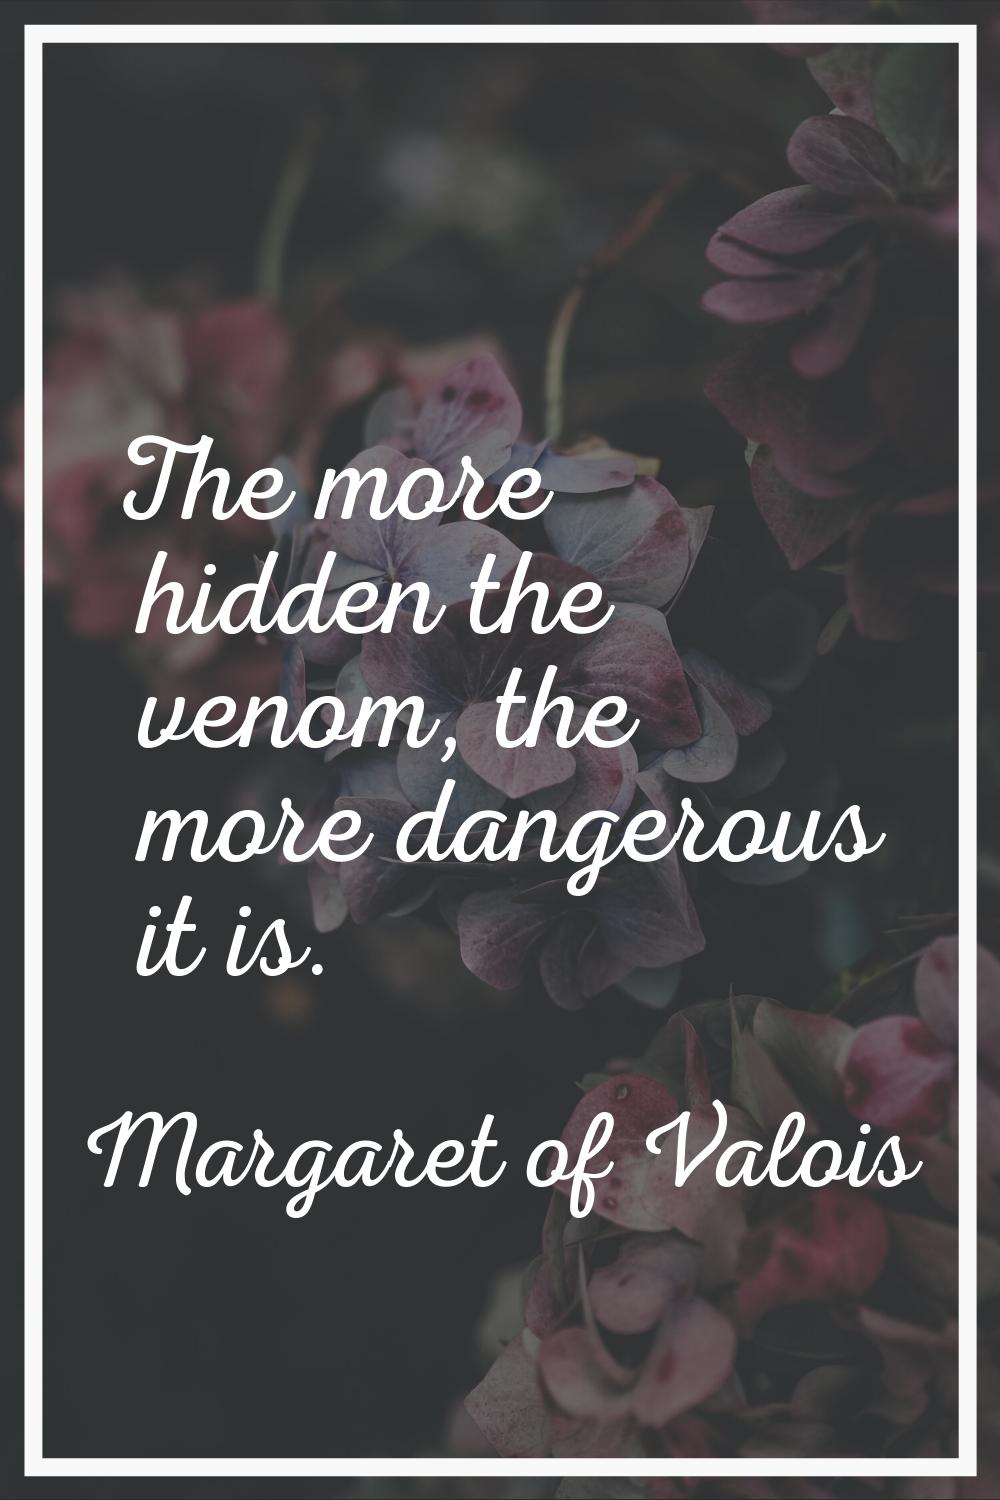 The more hidden the venom, the more dangerous it is.